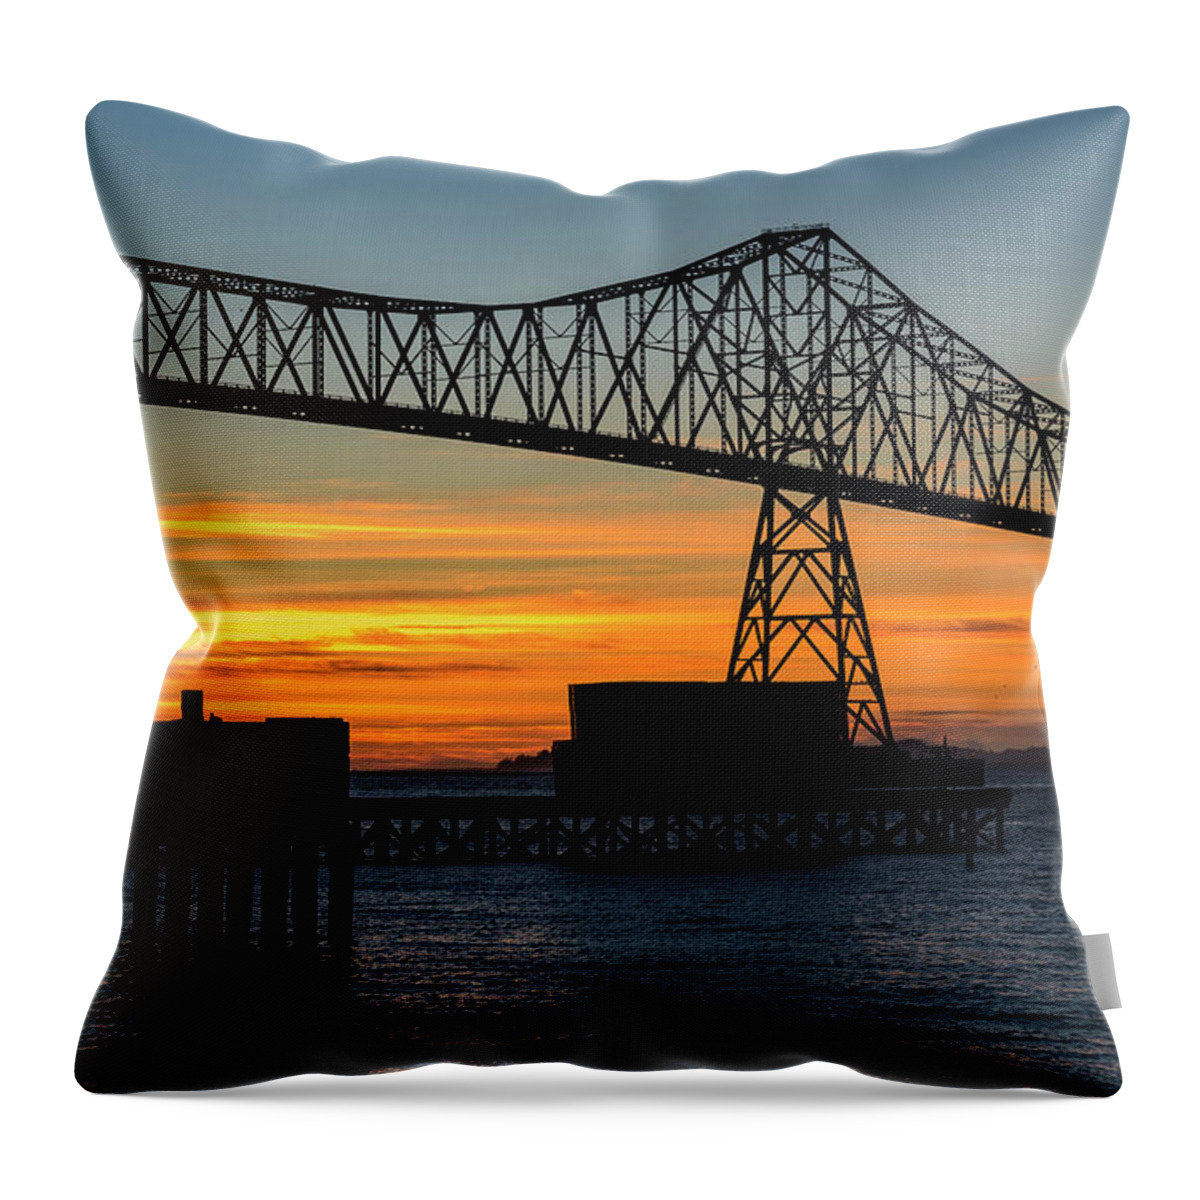 Astoria Throw Pillow featuring the photograph Bridge Sunset Silhouette by Robert Potts